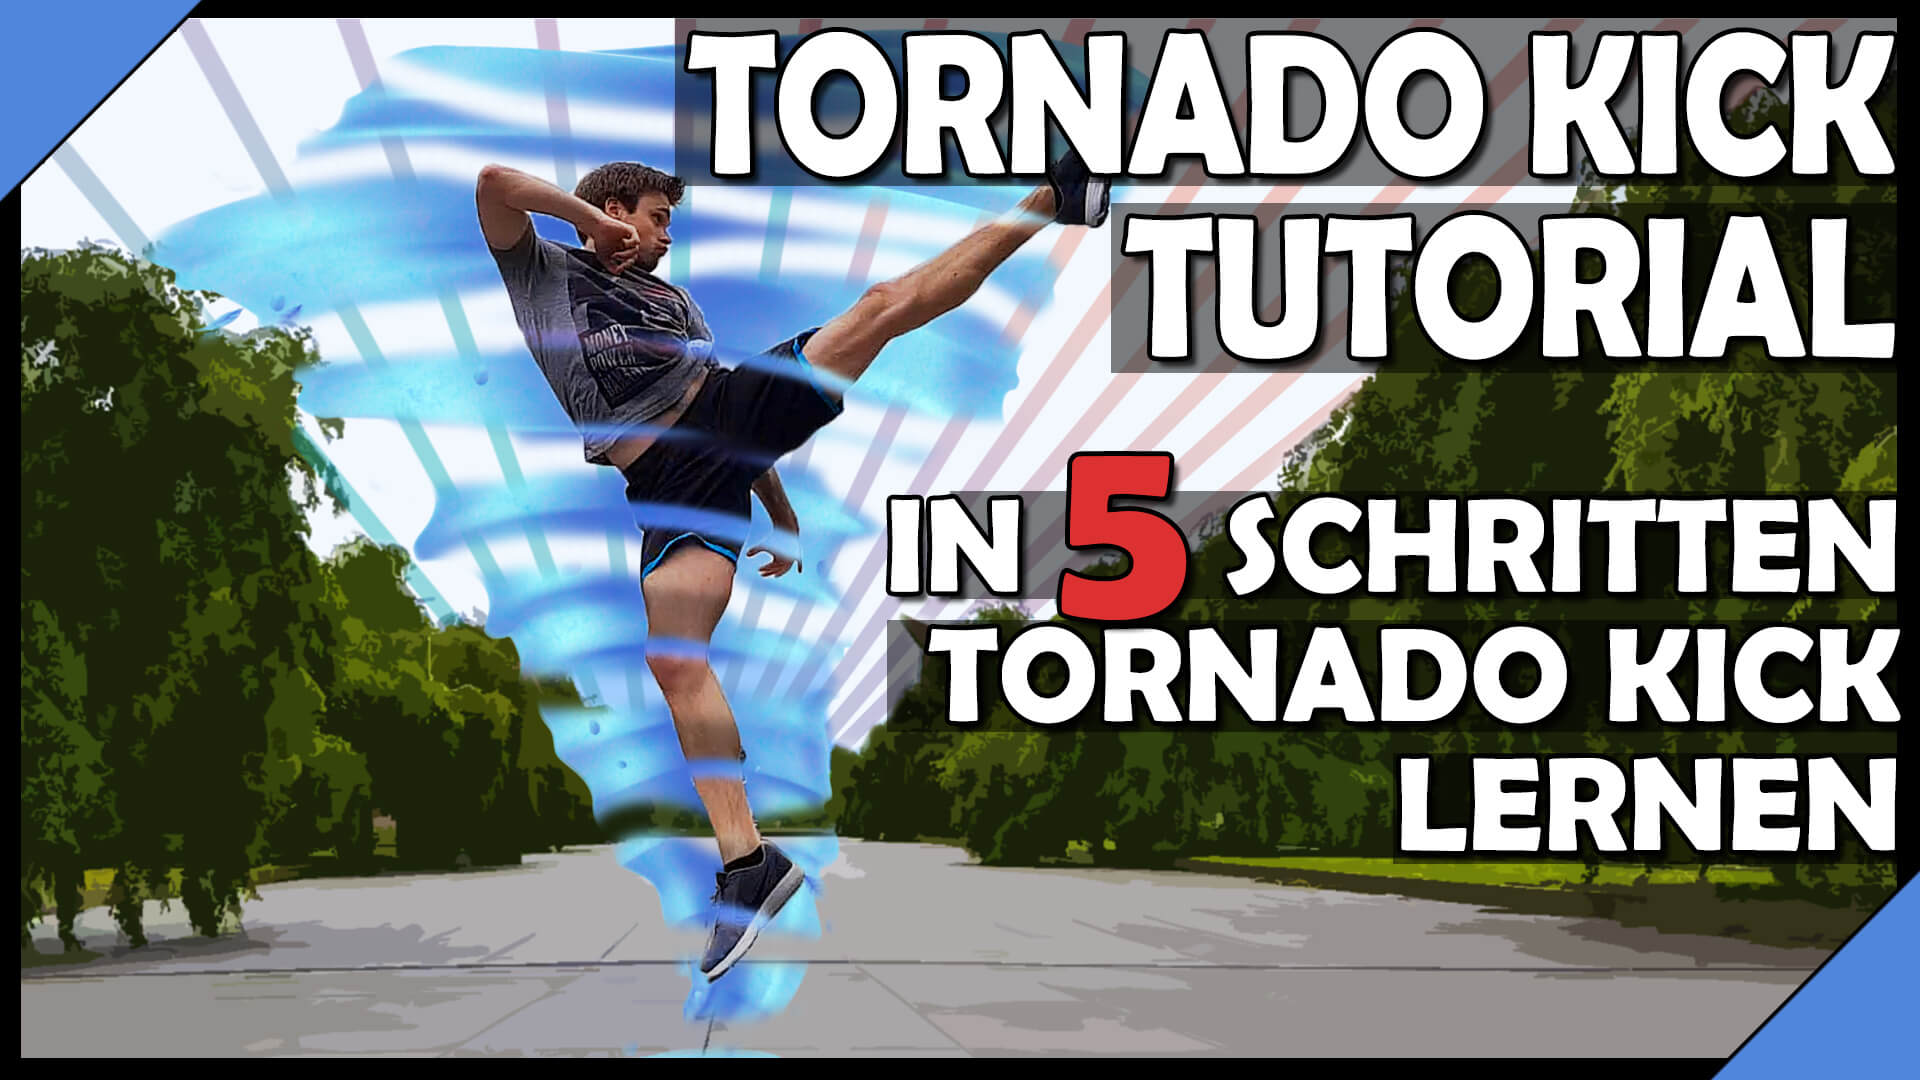 tornado kick lernen tutorial thumbnail